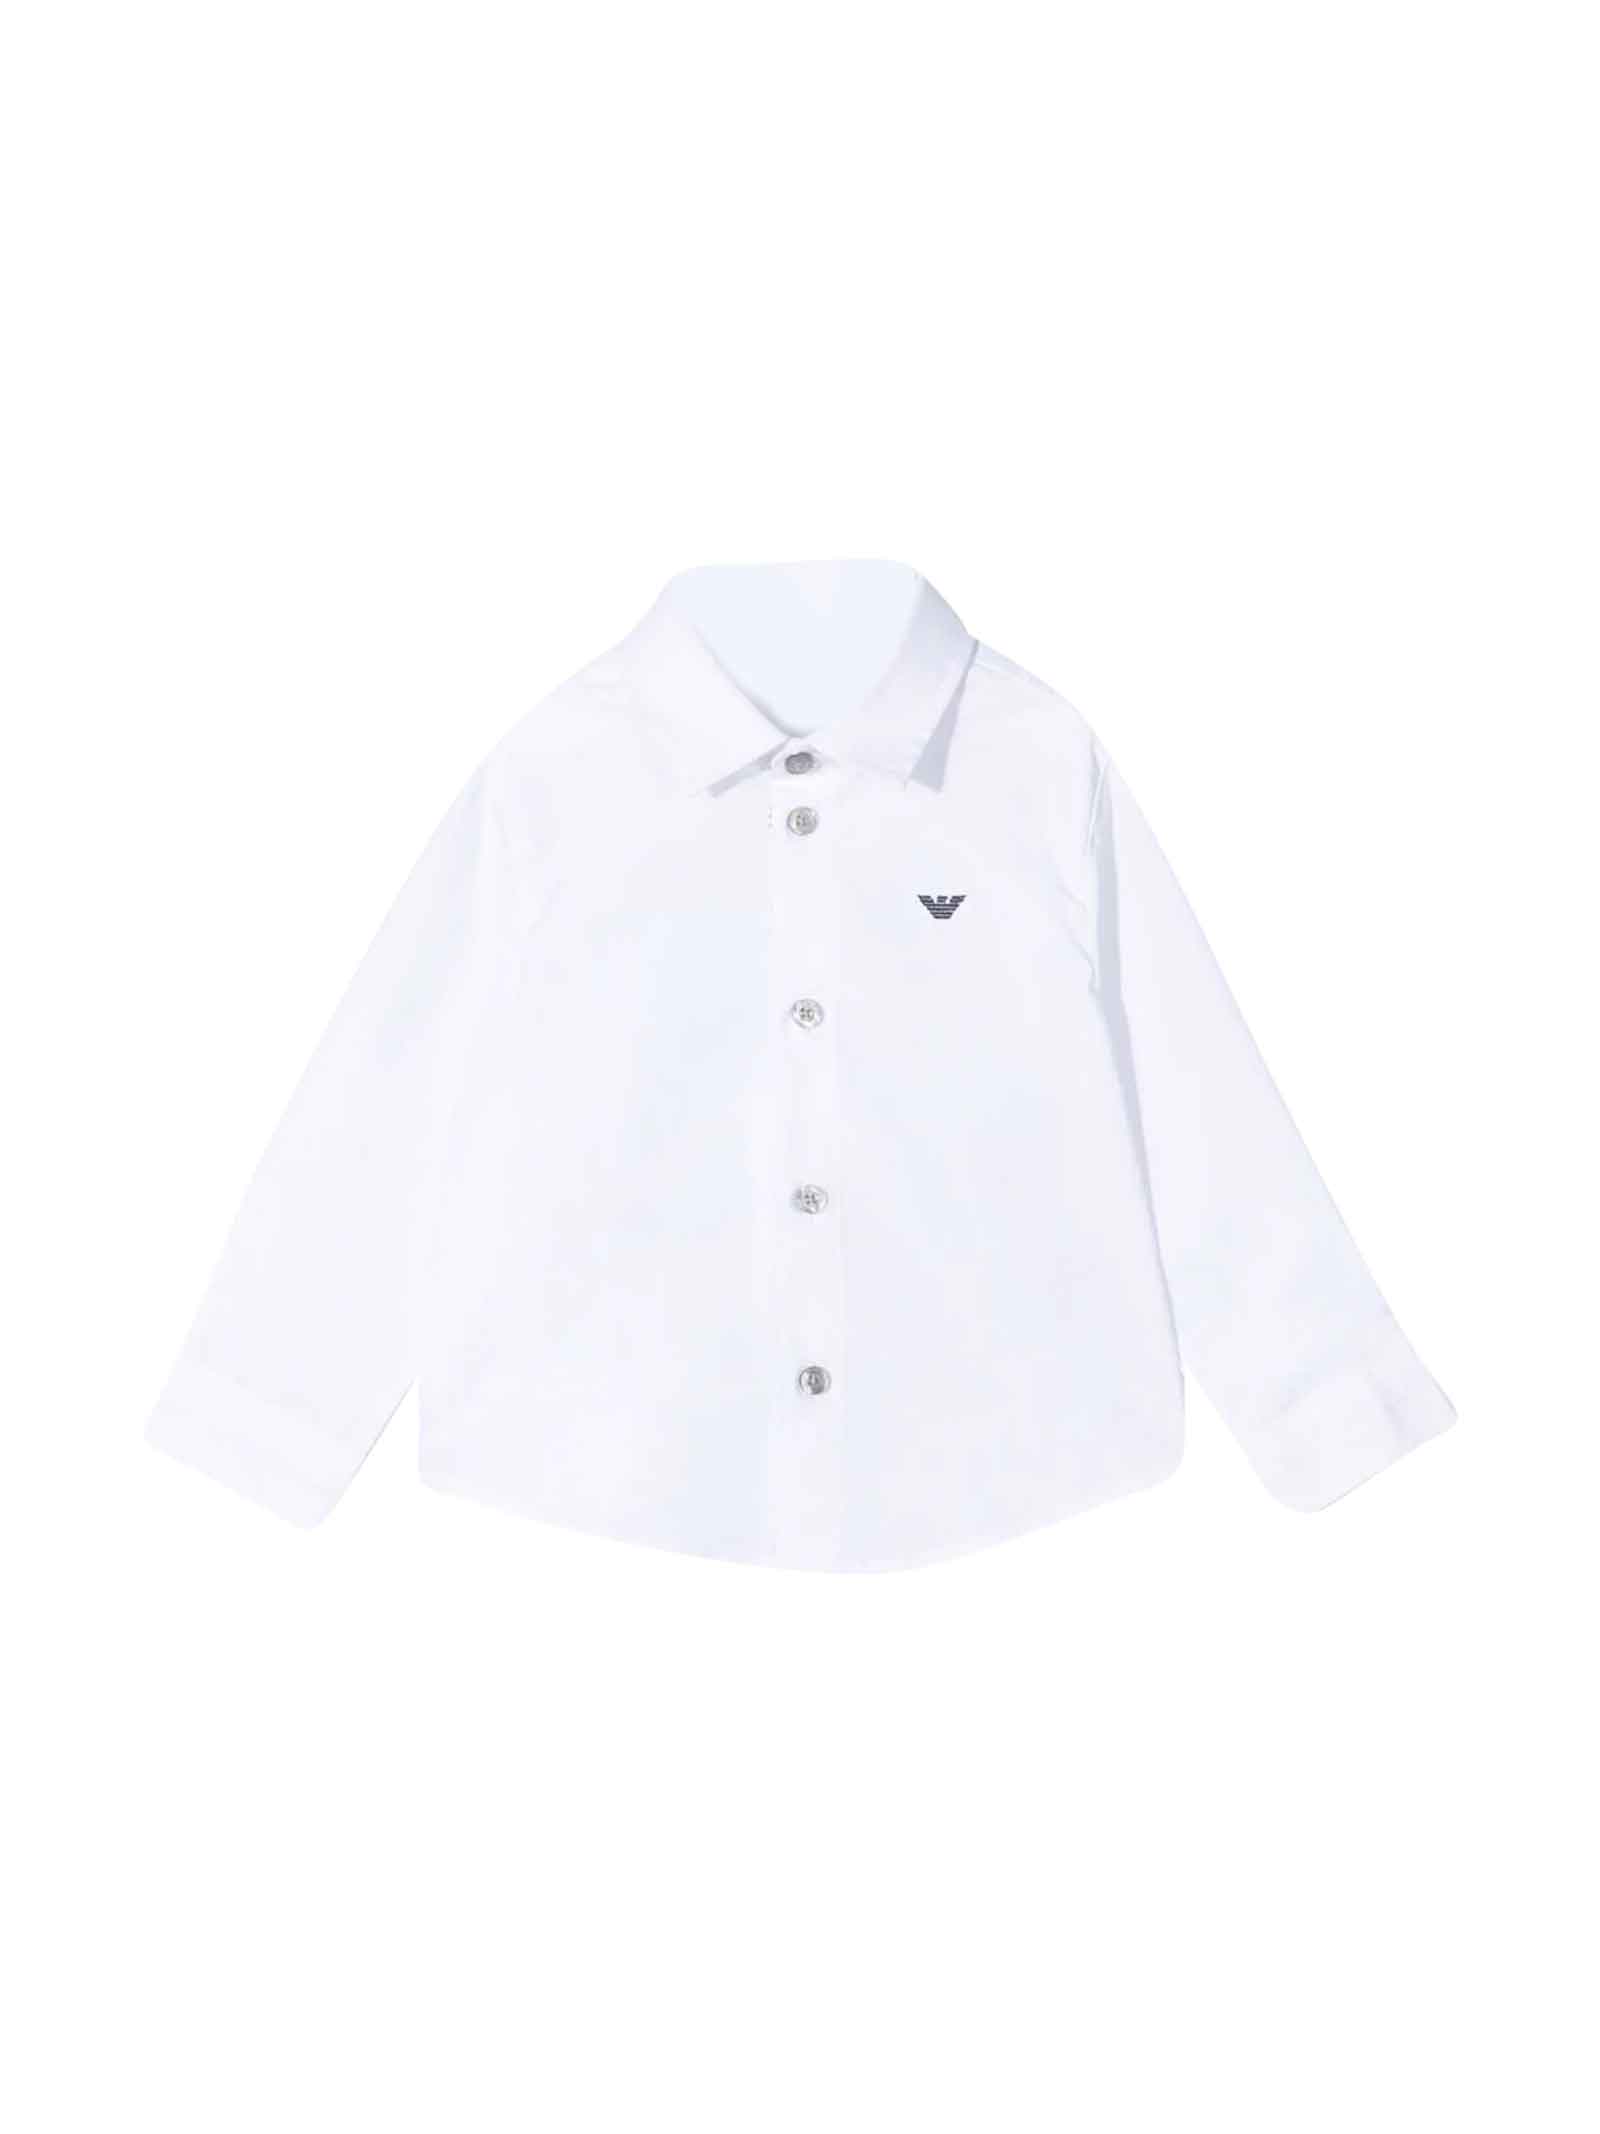 Emporio Armani Newborn White Shirt